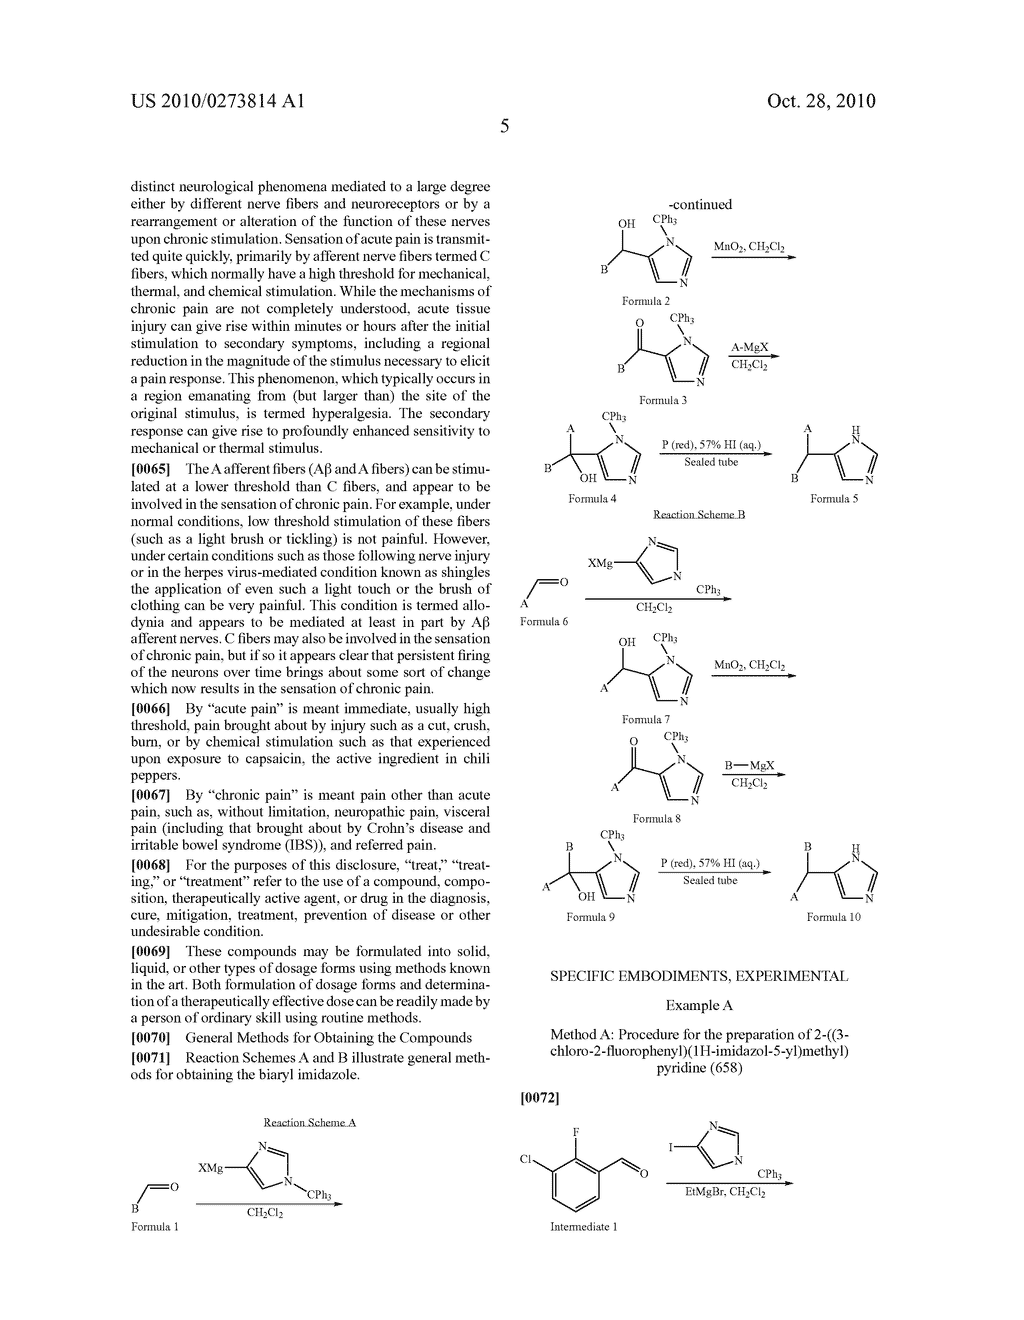 ((PHENYL)IMIDAZOLYL)METHYLHETEROARYL COMPOUNDS - diagram, schematic, and image 06